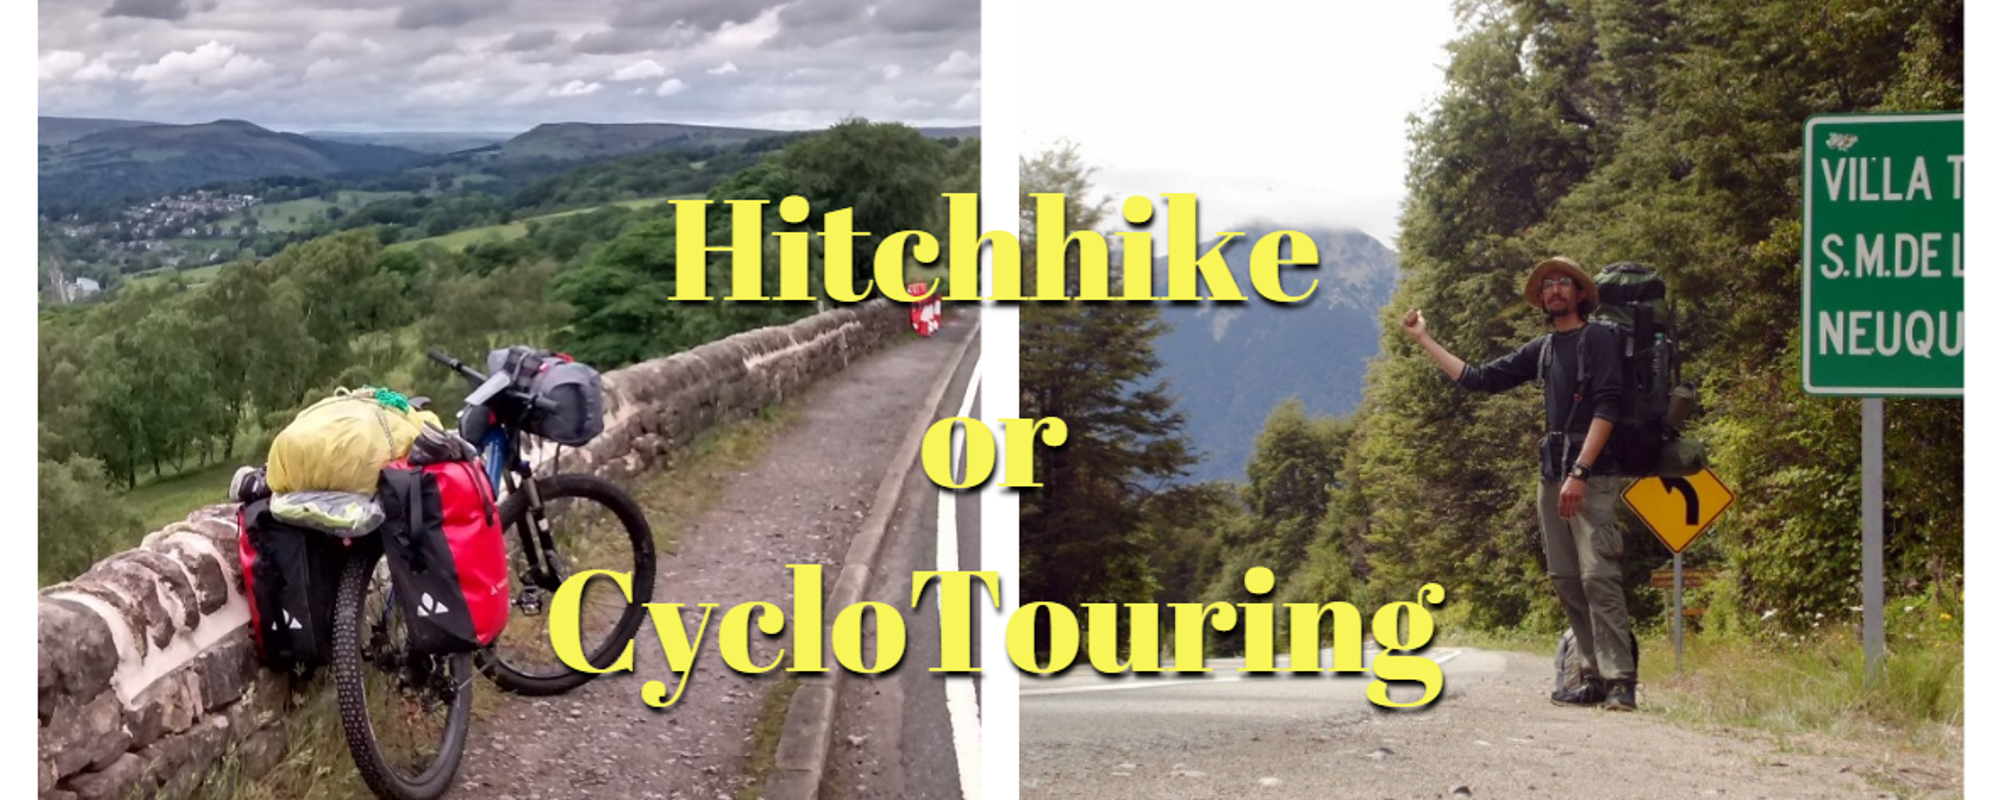 TRAVEL: Hitchhiking vs. Bicycle Touring